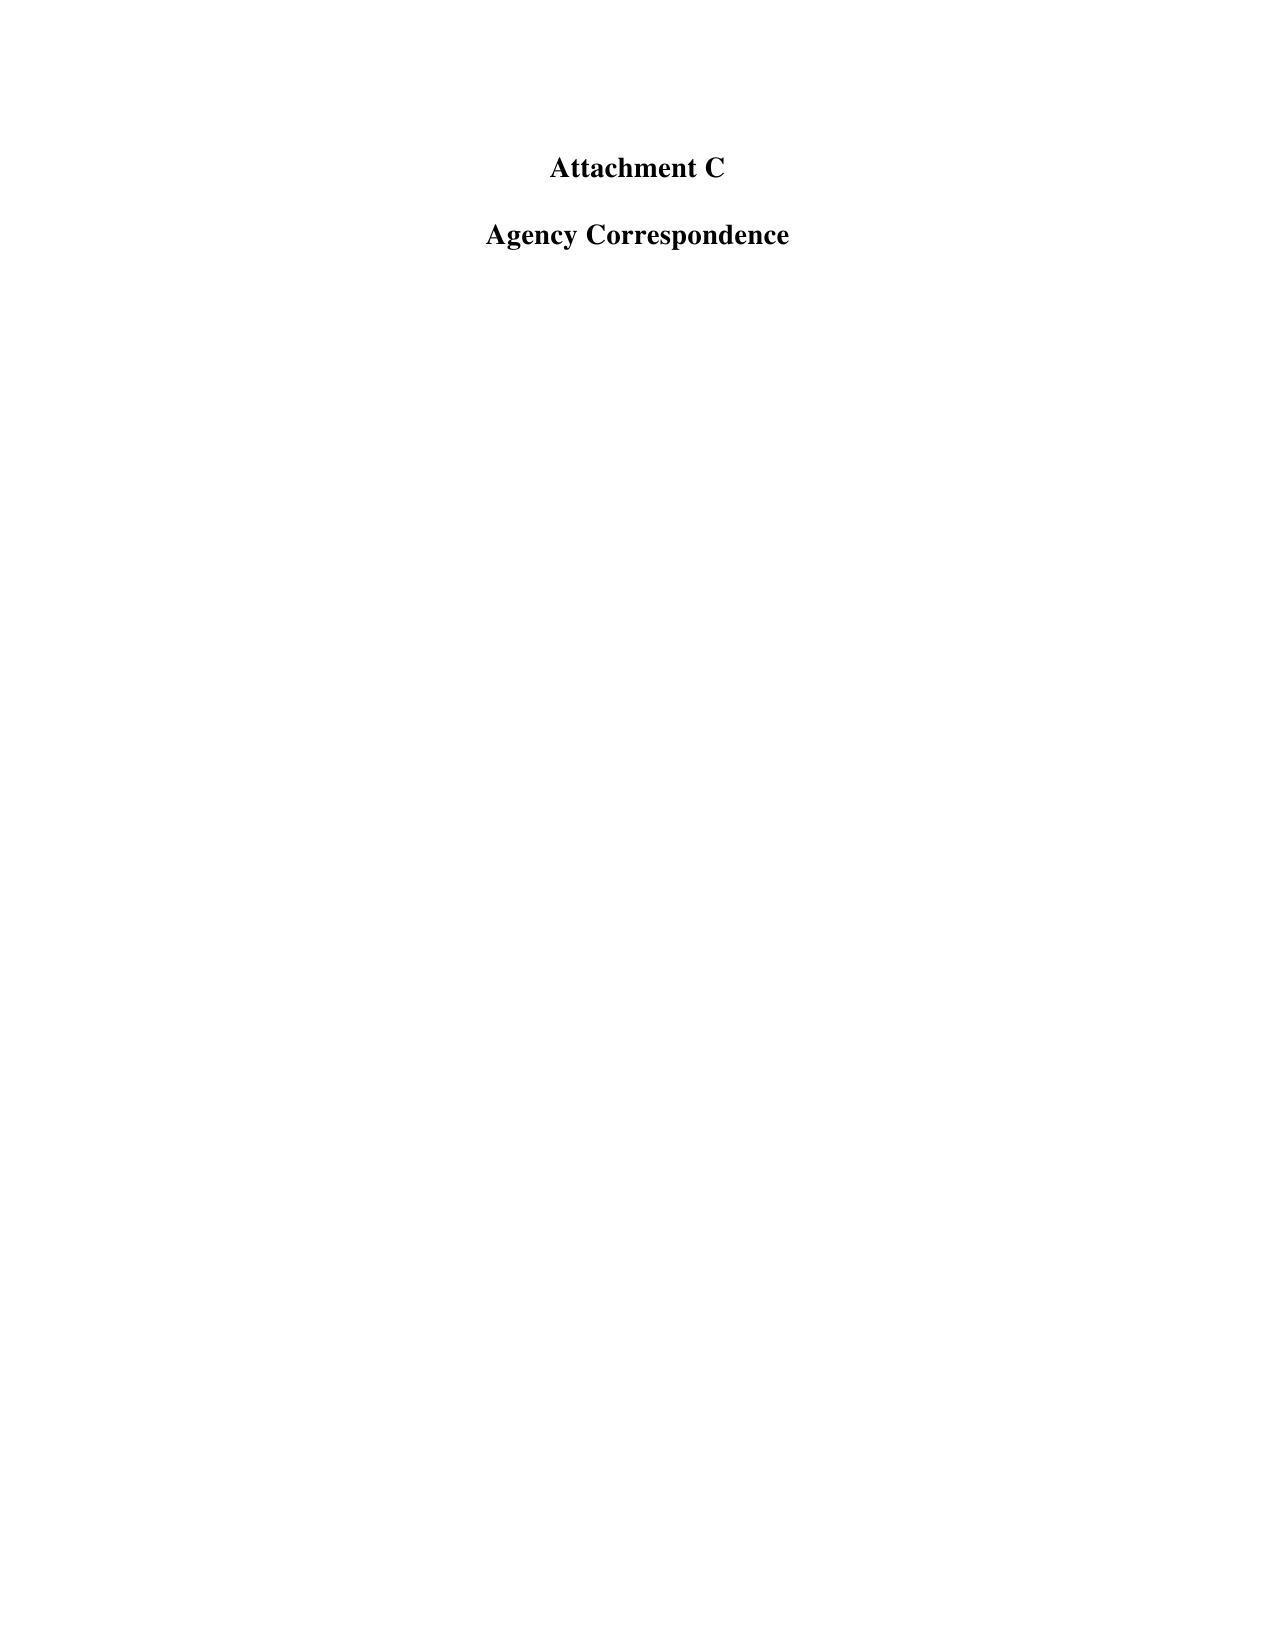 Attachment C: Agency Correspondence